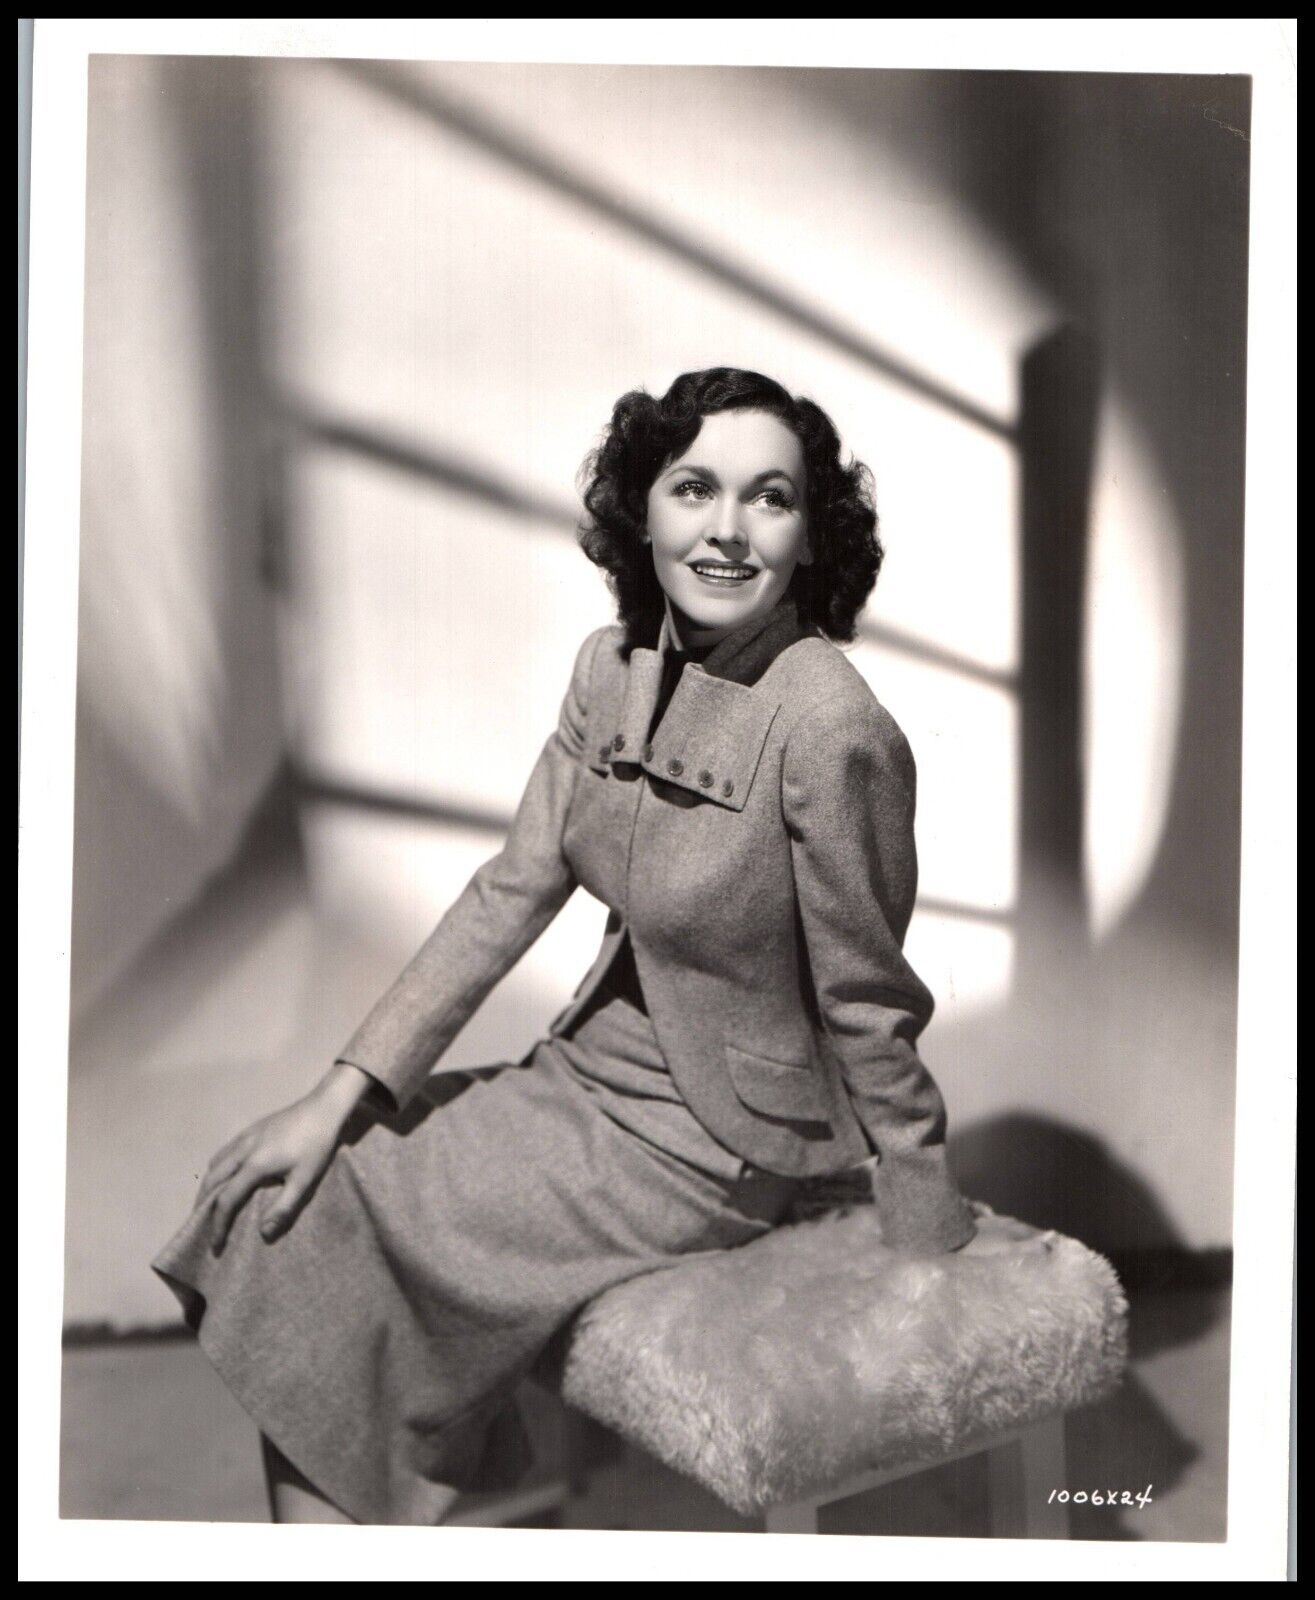 Maureen O'Sullivan (1940s) Hollywood beauty - Stylish Pose MGM Photo K 163